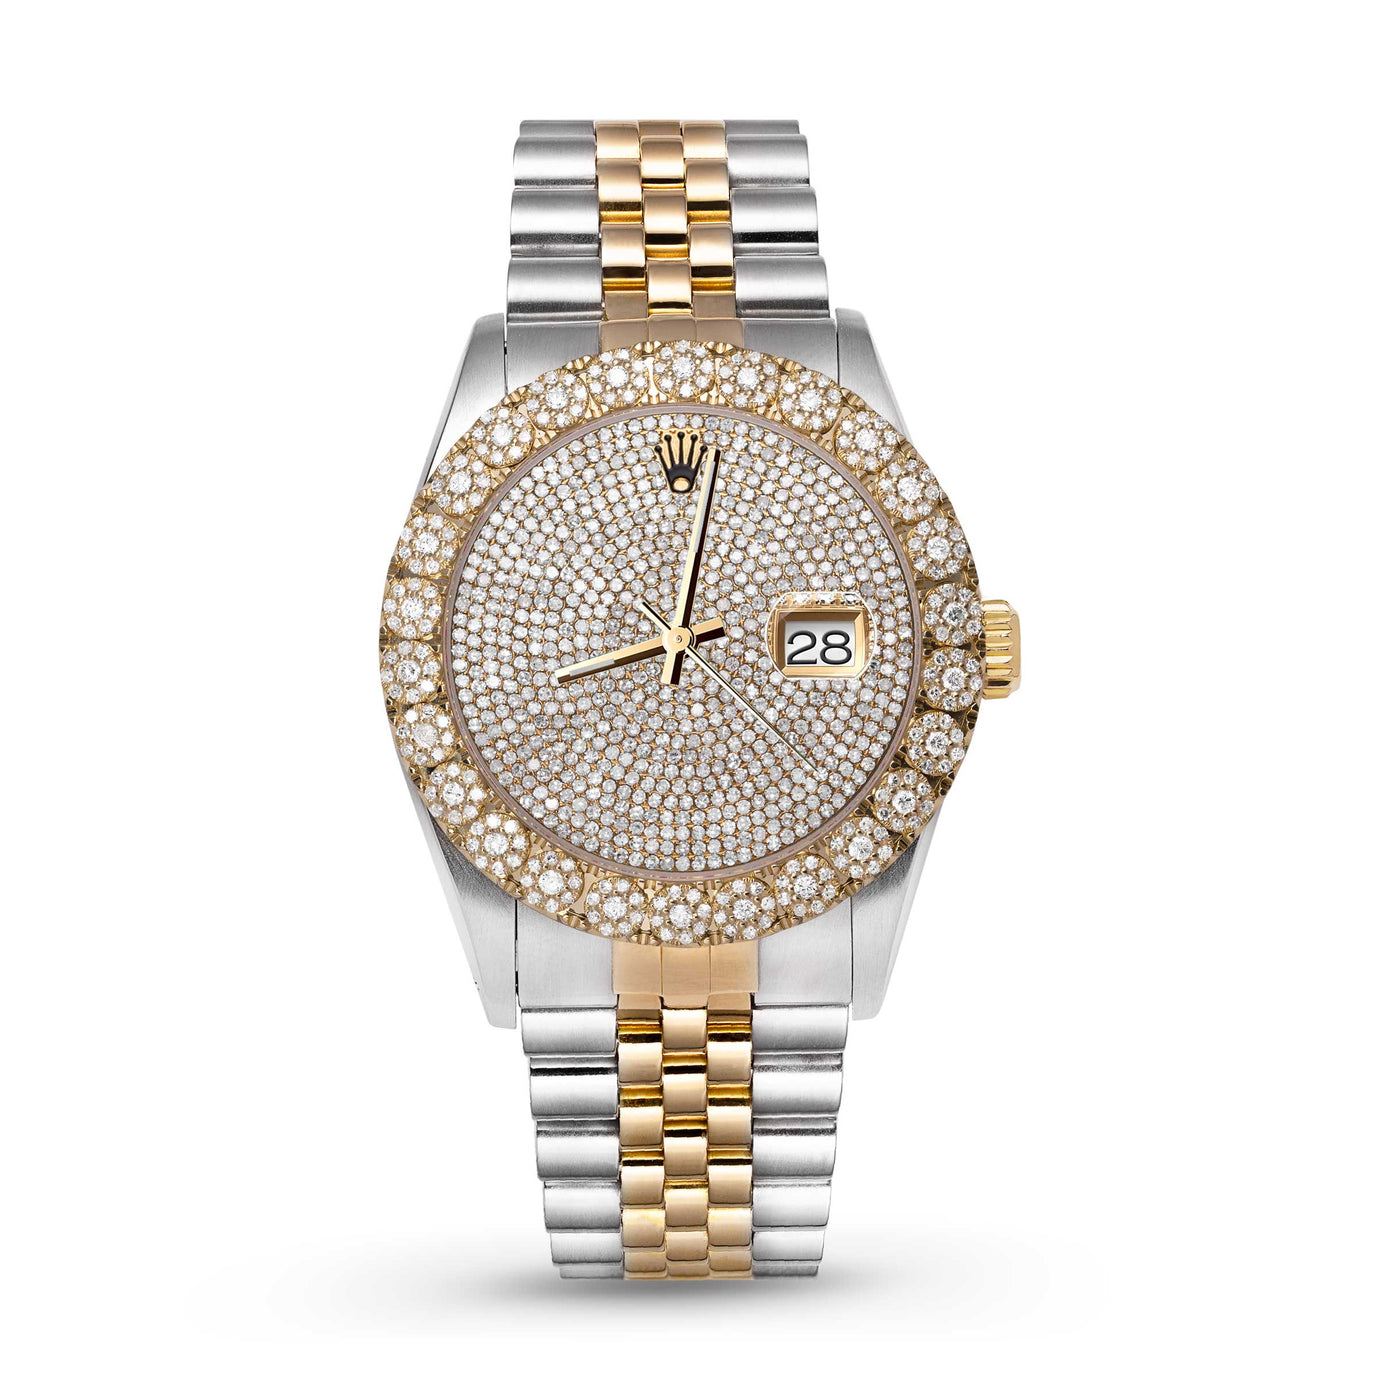 Rolex Datejust Diamond Bezel Watch 36mm Champagne Dial | 3.85ct